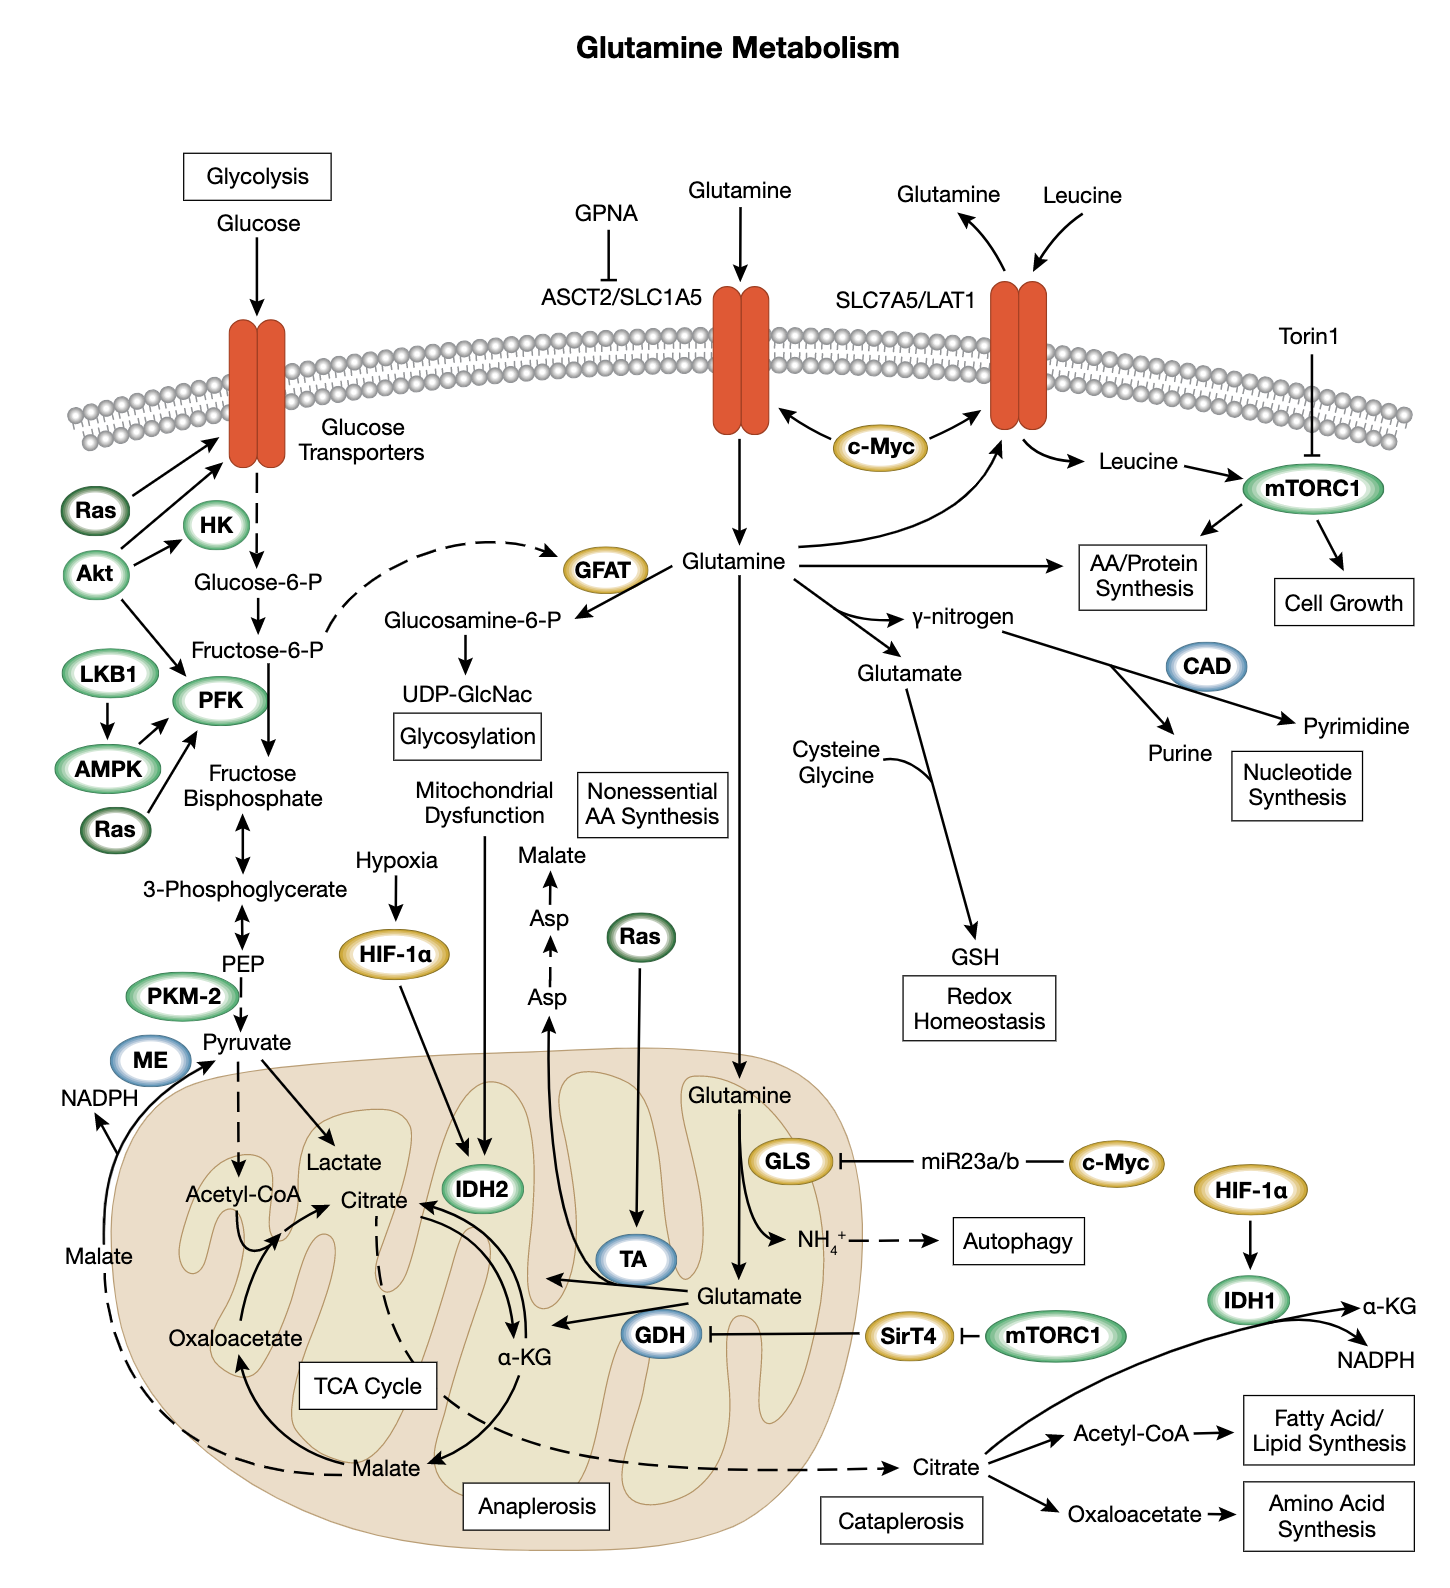 Glutamine Metabolism Interactive Signaling Pathway